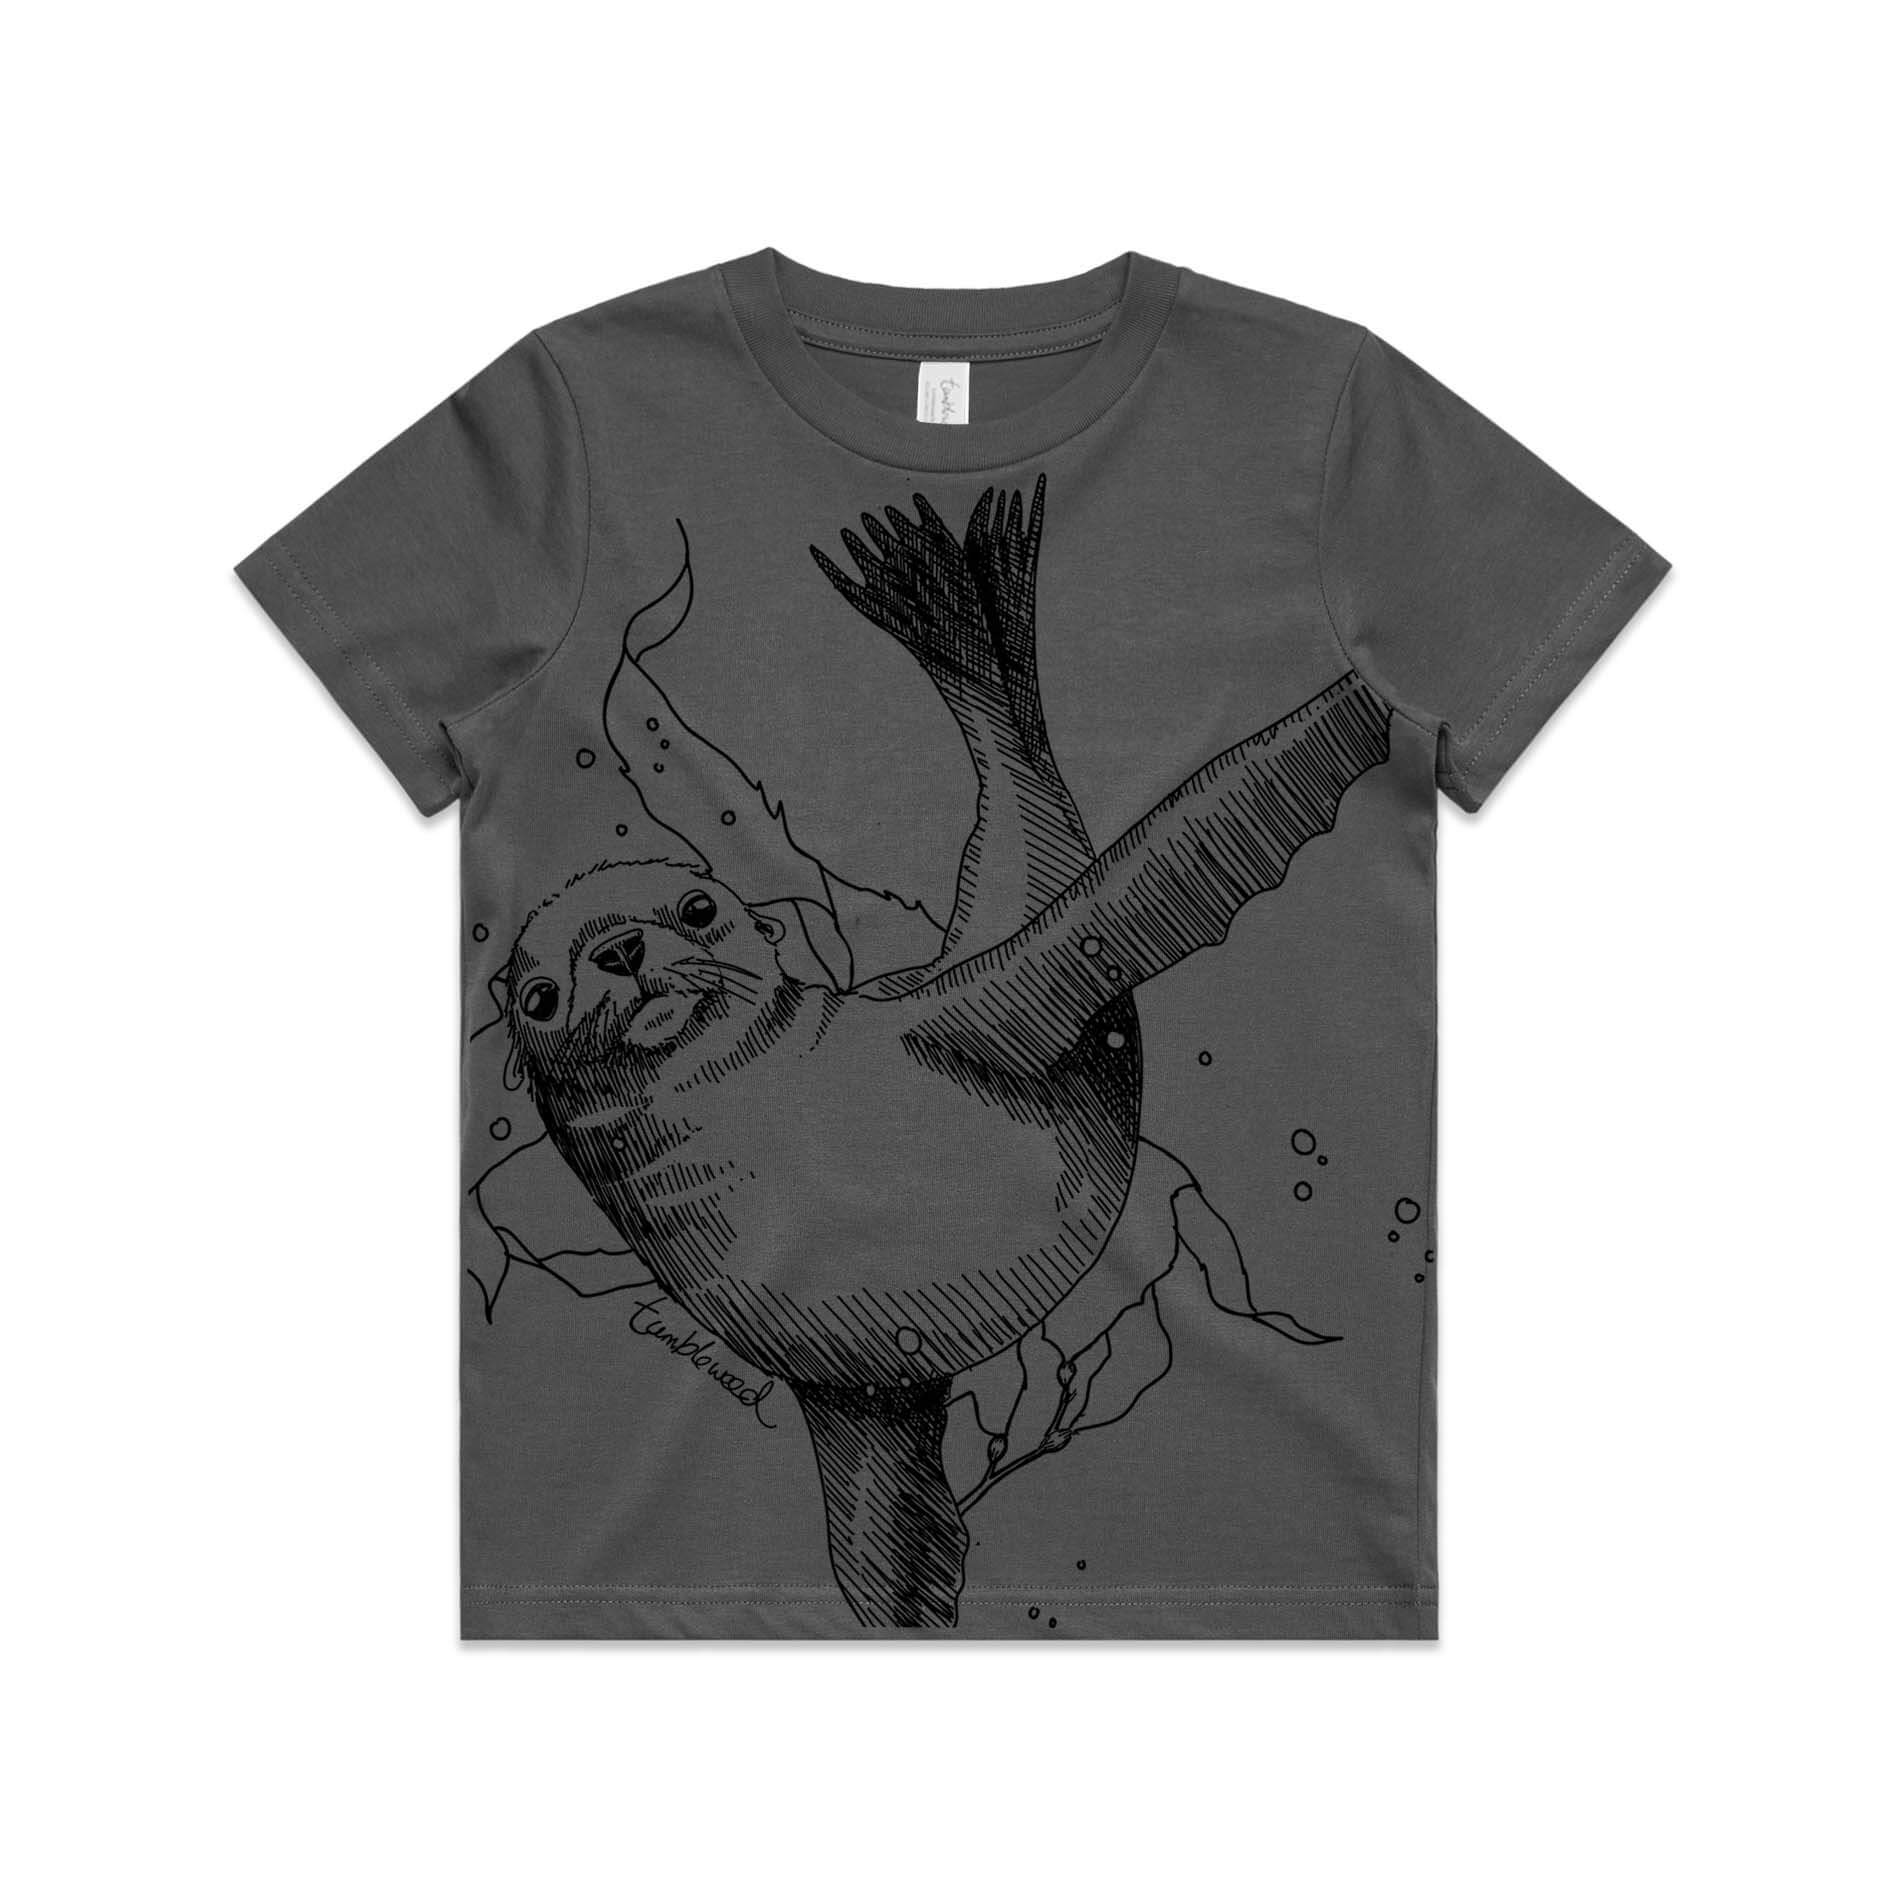 Charcoal, kids’ t-shirt featuring a screen printed New Zealand sea lion design.